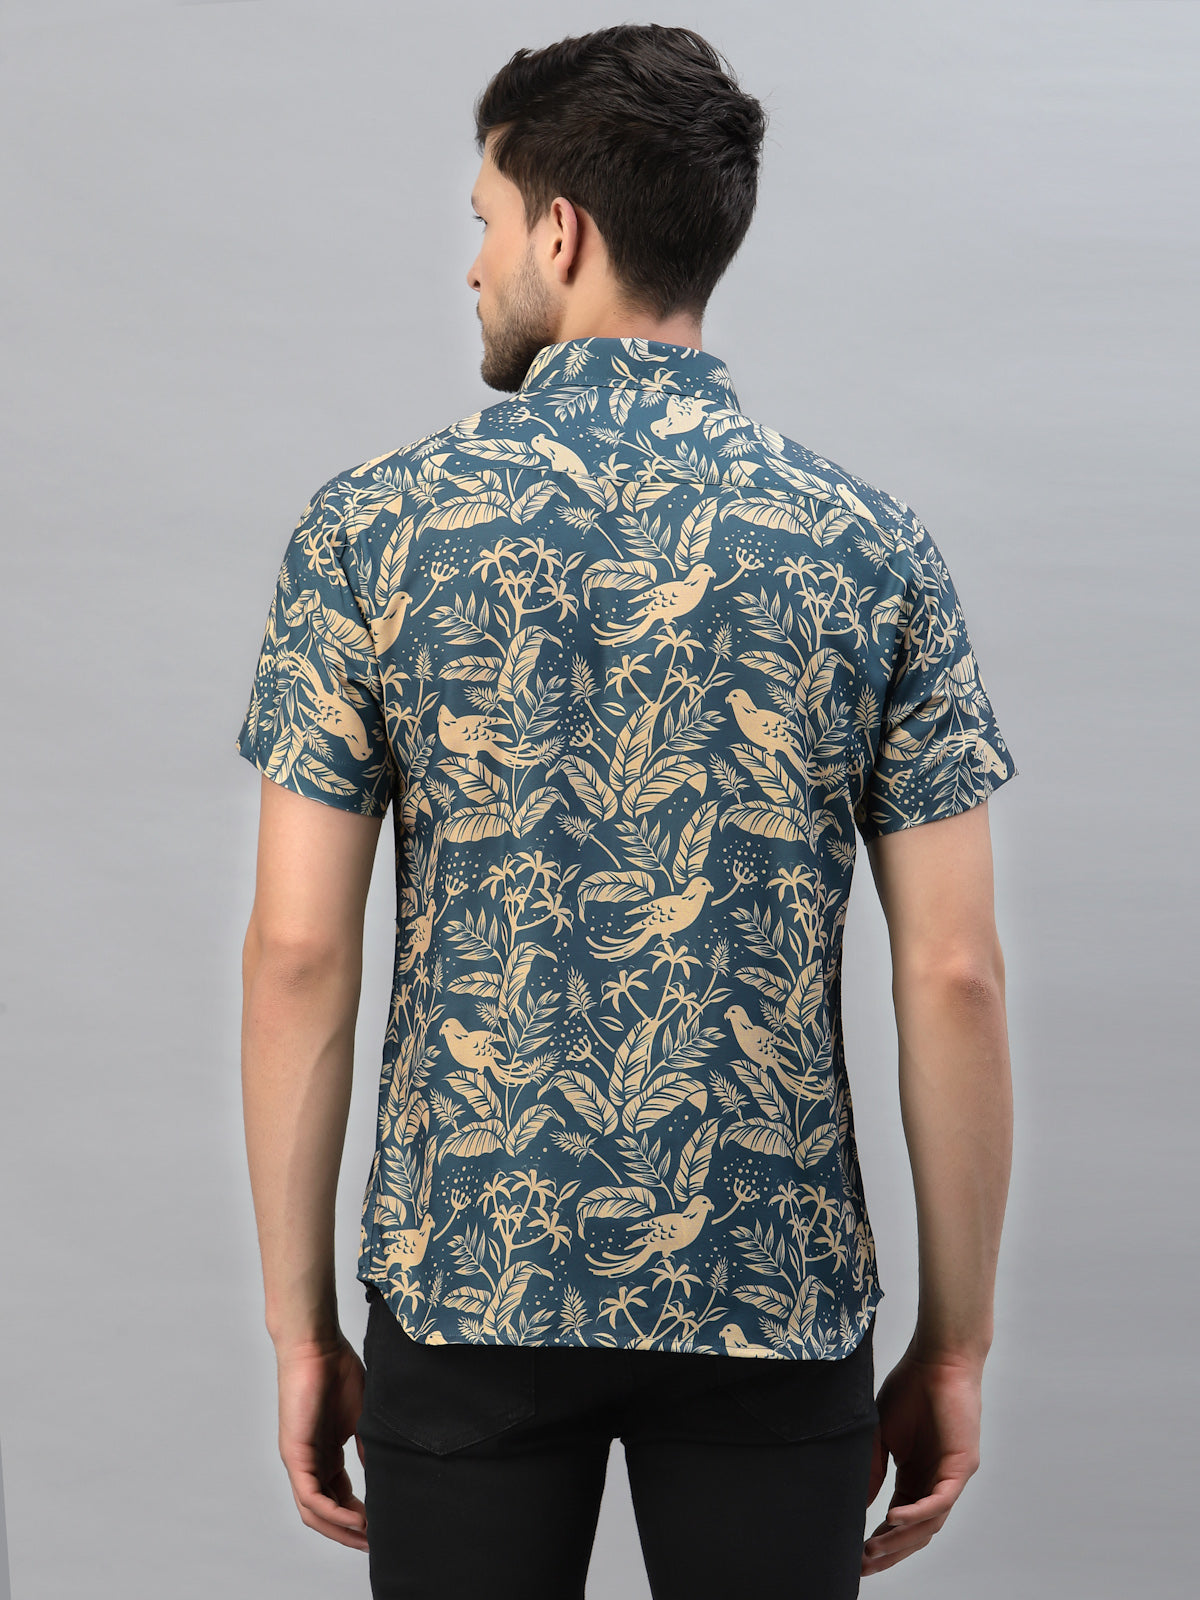 Sparrow Leaf Printed Half Sleeve Shirt By Gavin Paris